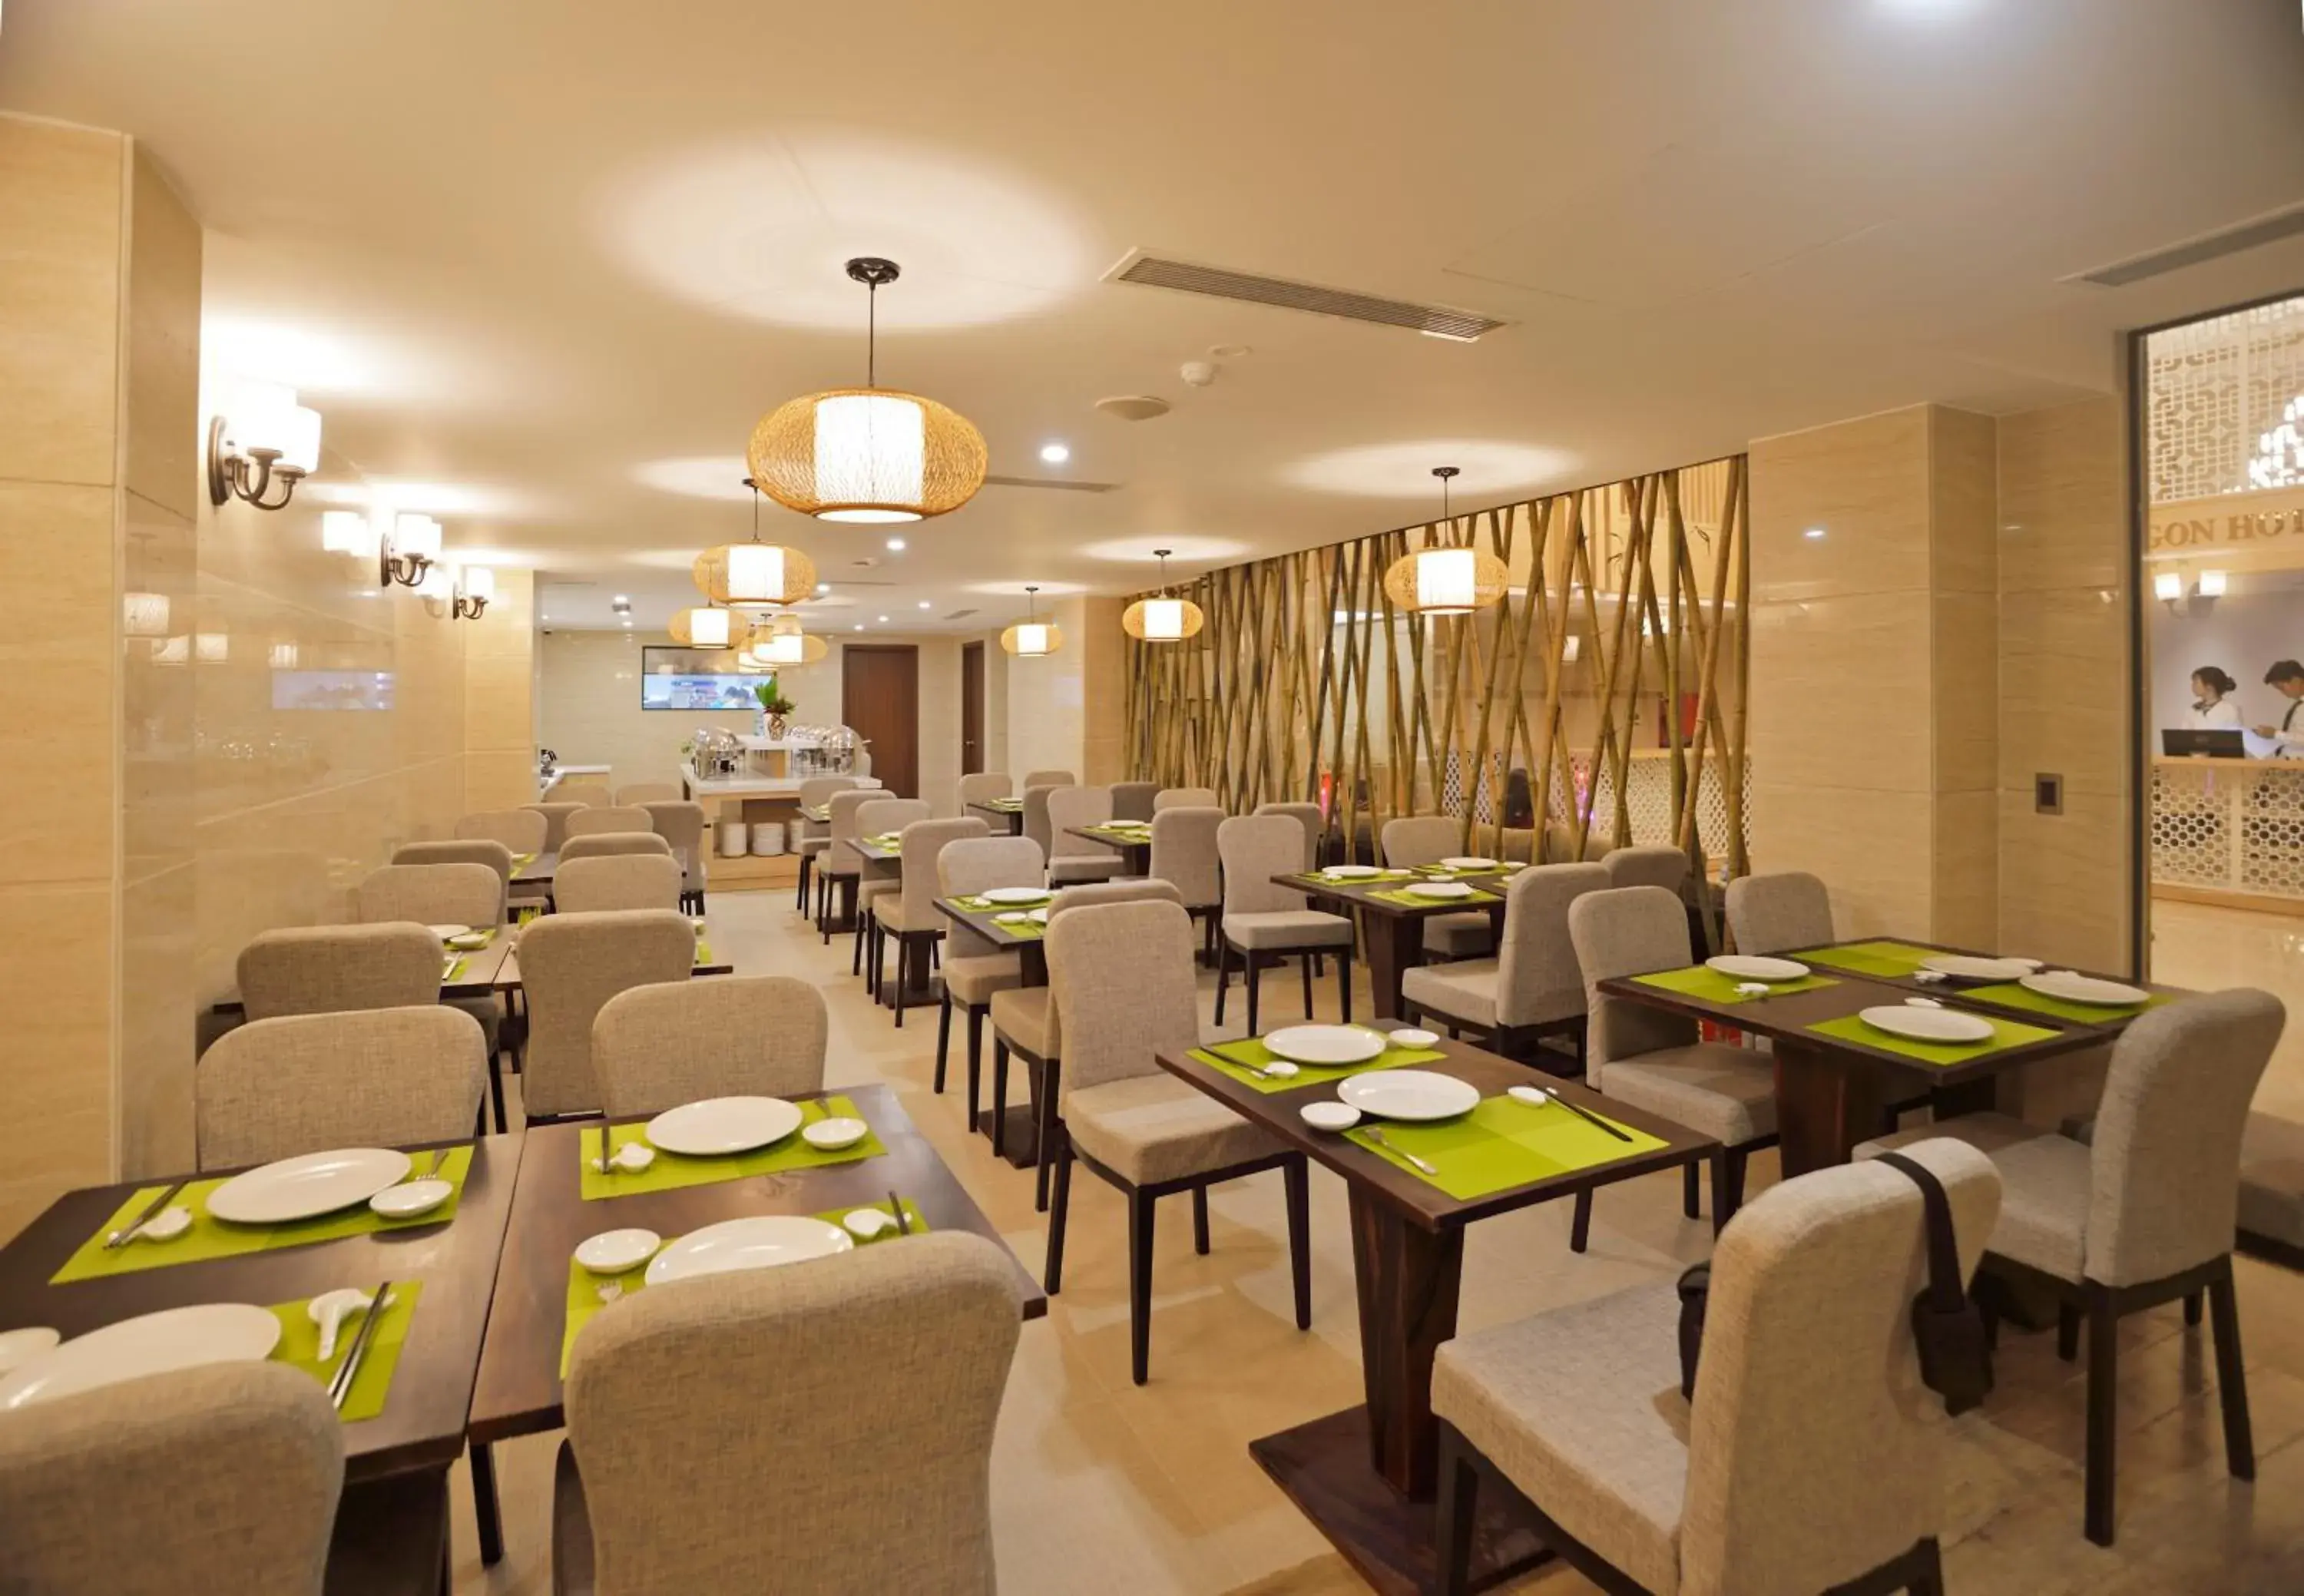 Restaurant/Places to Eat in Aiden Saigon Hotel